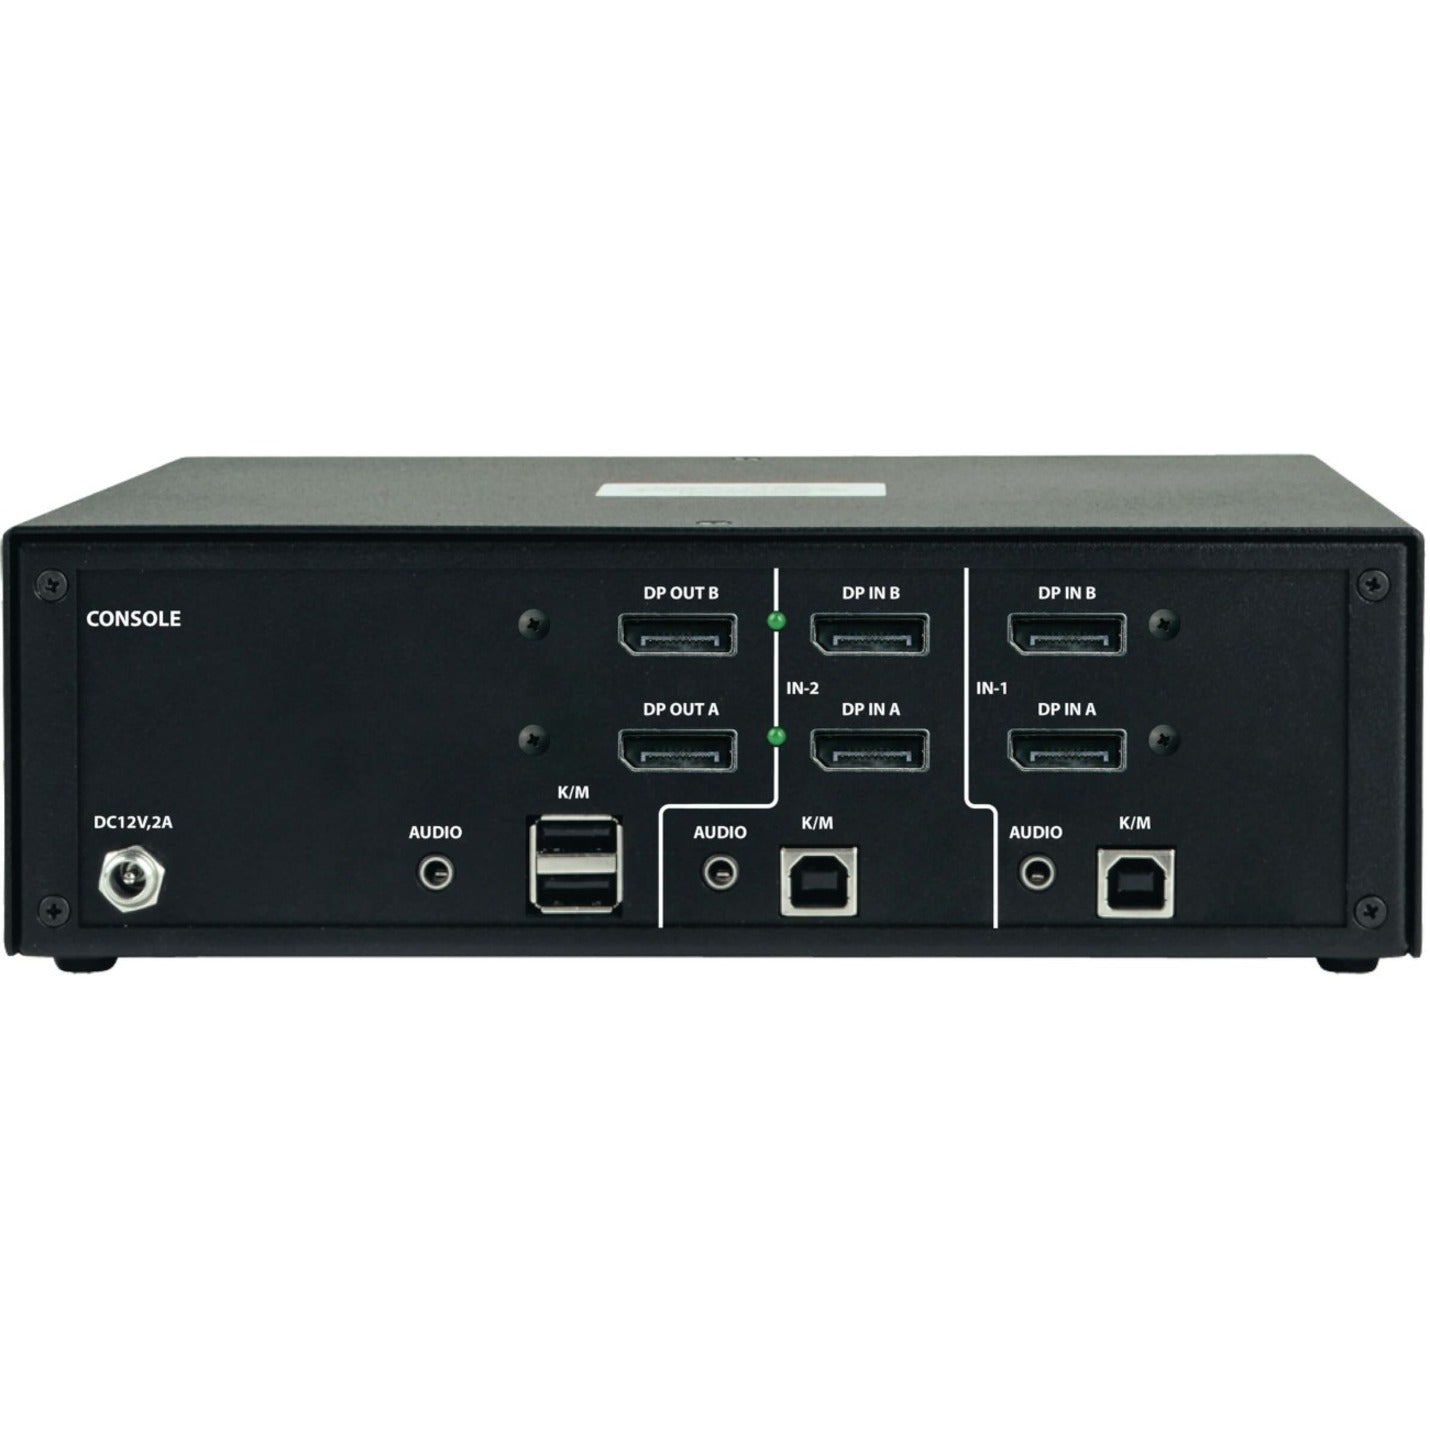 Tripp Lite B002A-DP2A2 2-Port NIAP PP3.0-Certified DisplayPort KVM Switch, Dual-Monitor 4K, TAA Compliant